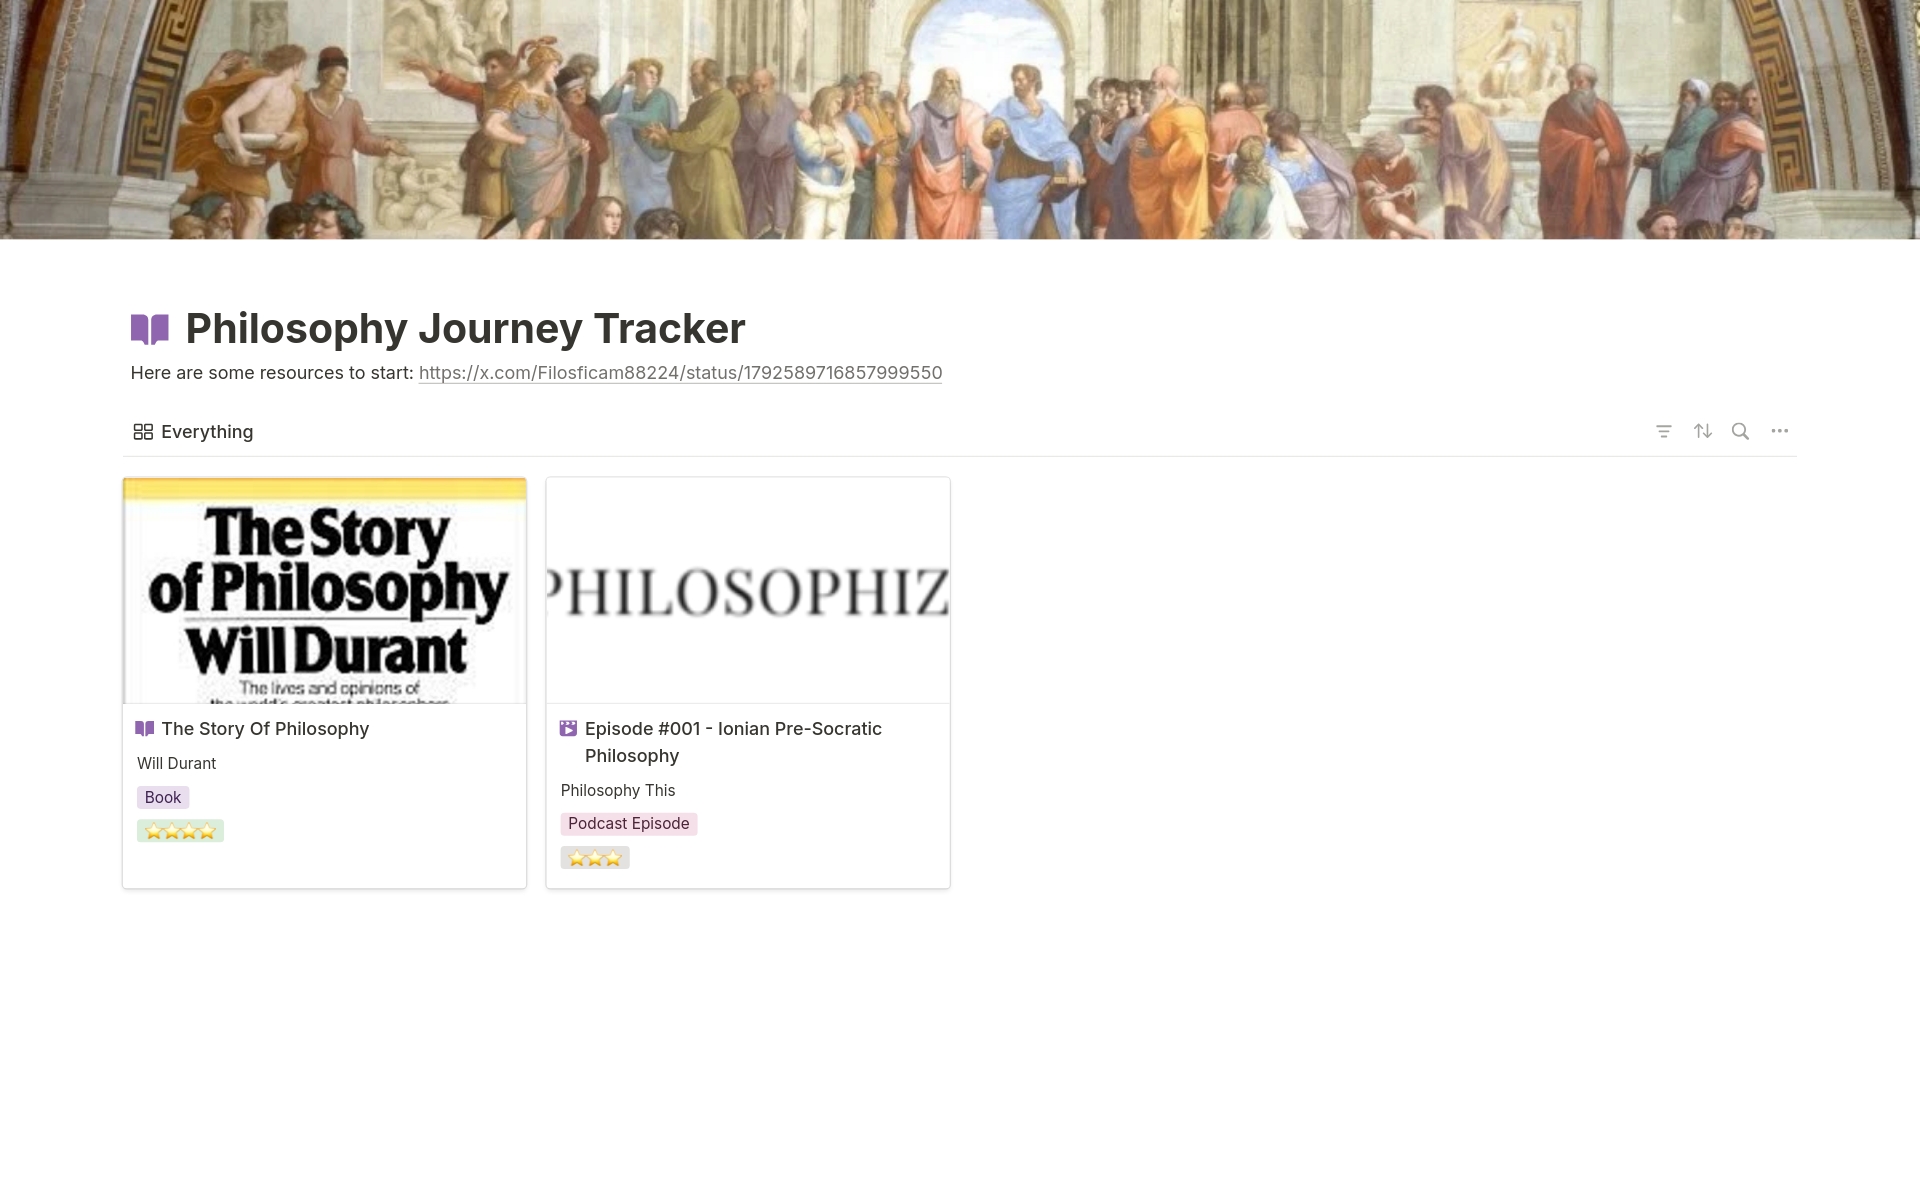 Aperçu du modèle de Philosophy Journey Tracker